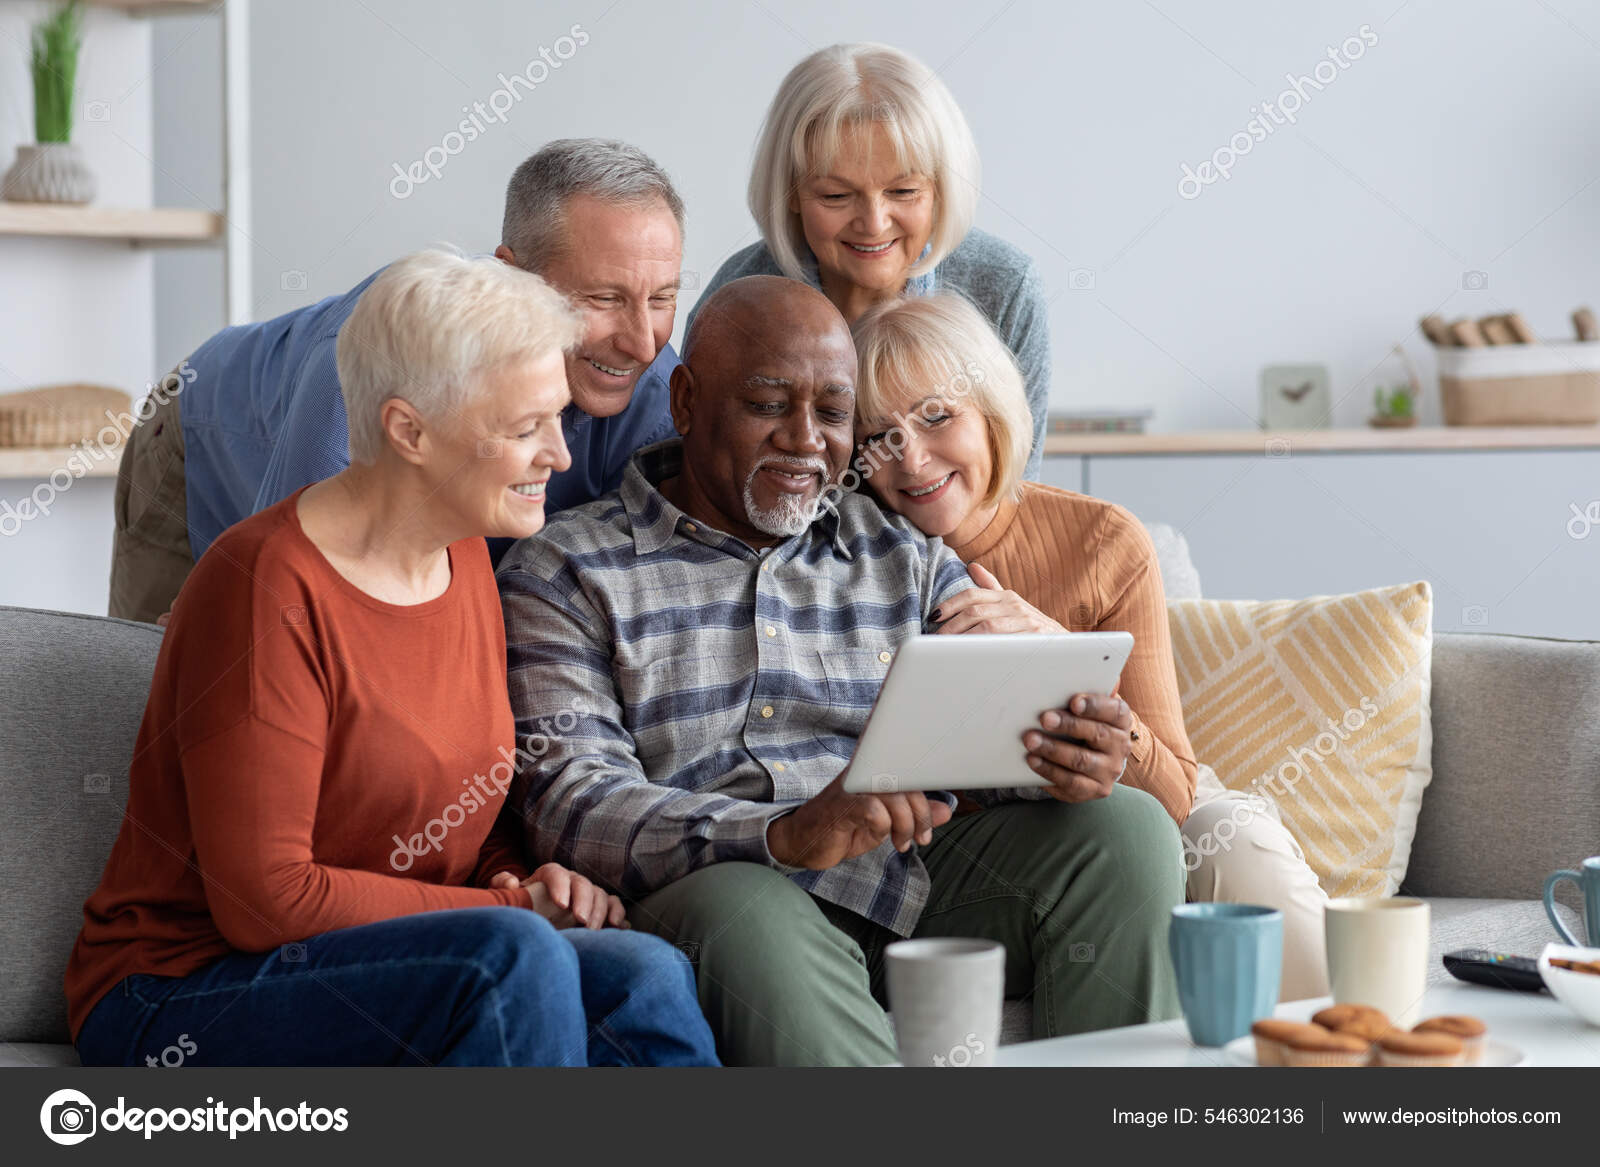 https://st.depositphotos.com/4218696/54630/i/1600/depositphotos_546302136-stock-photo-happy-elderly-people-spending-time.jpg